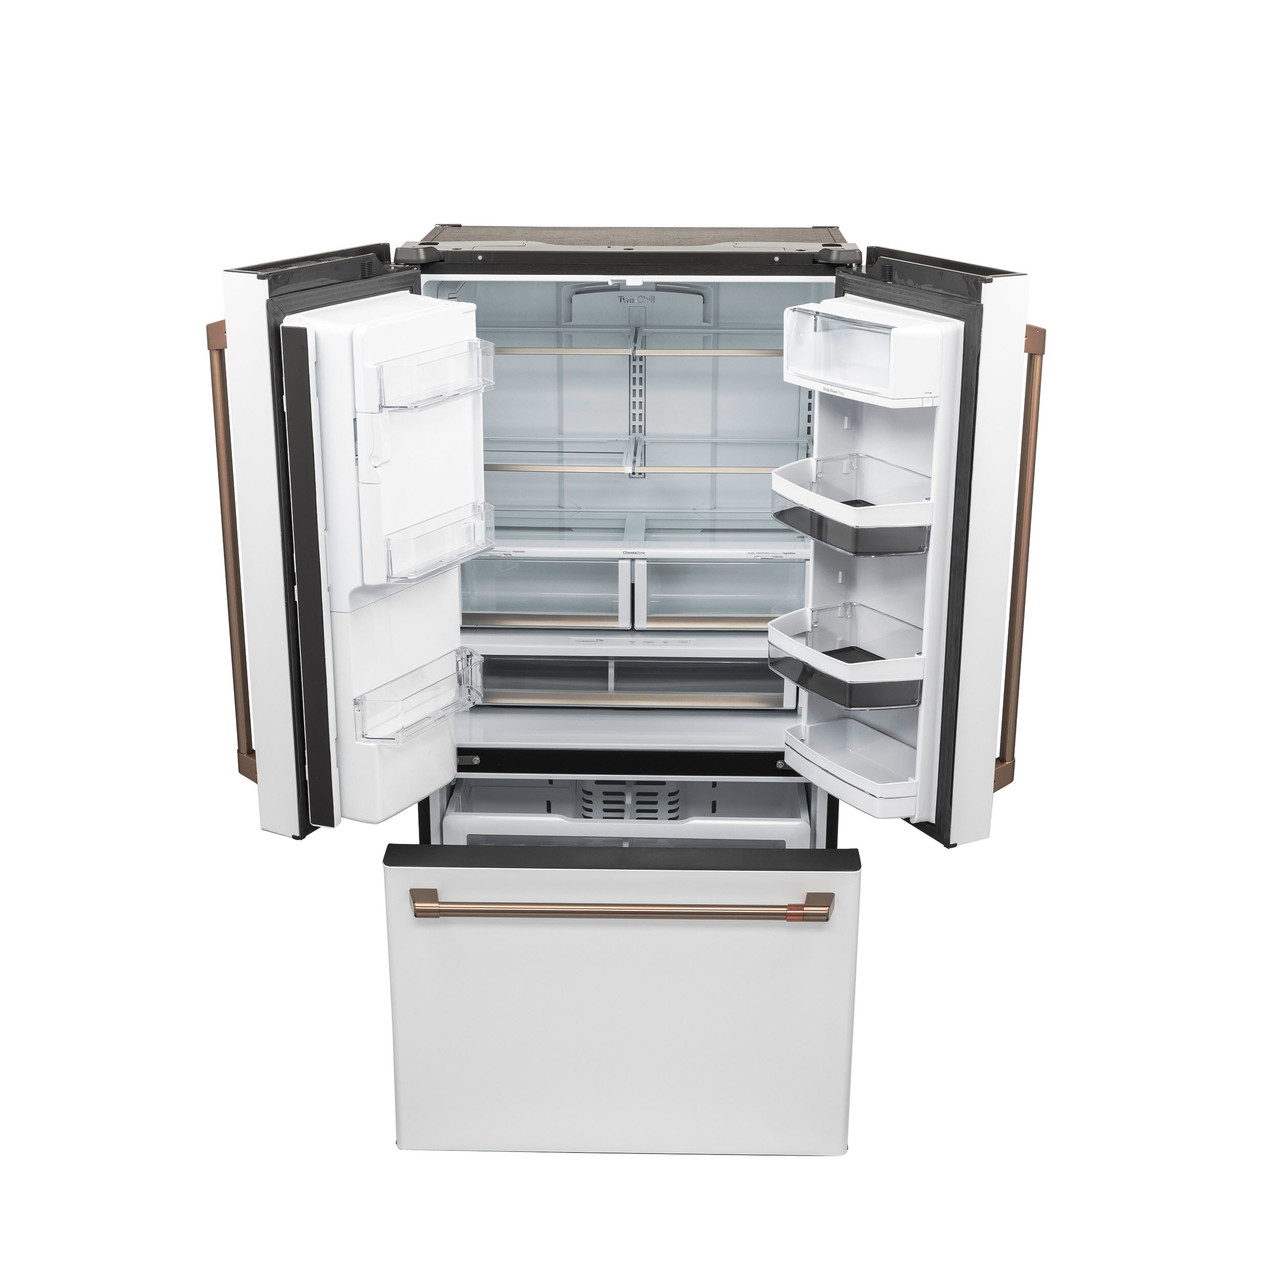 GE Refrigerator with Built-in Keurig Drink Dispenser - Today's Homeowner